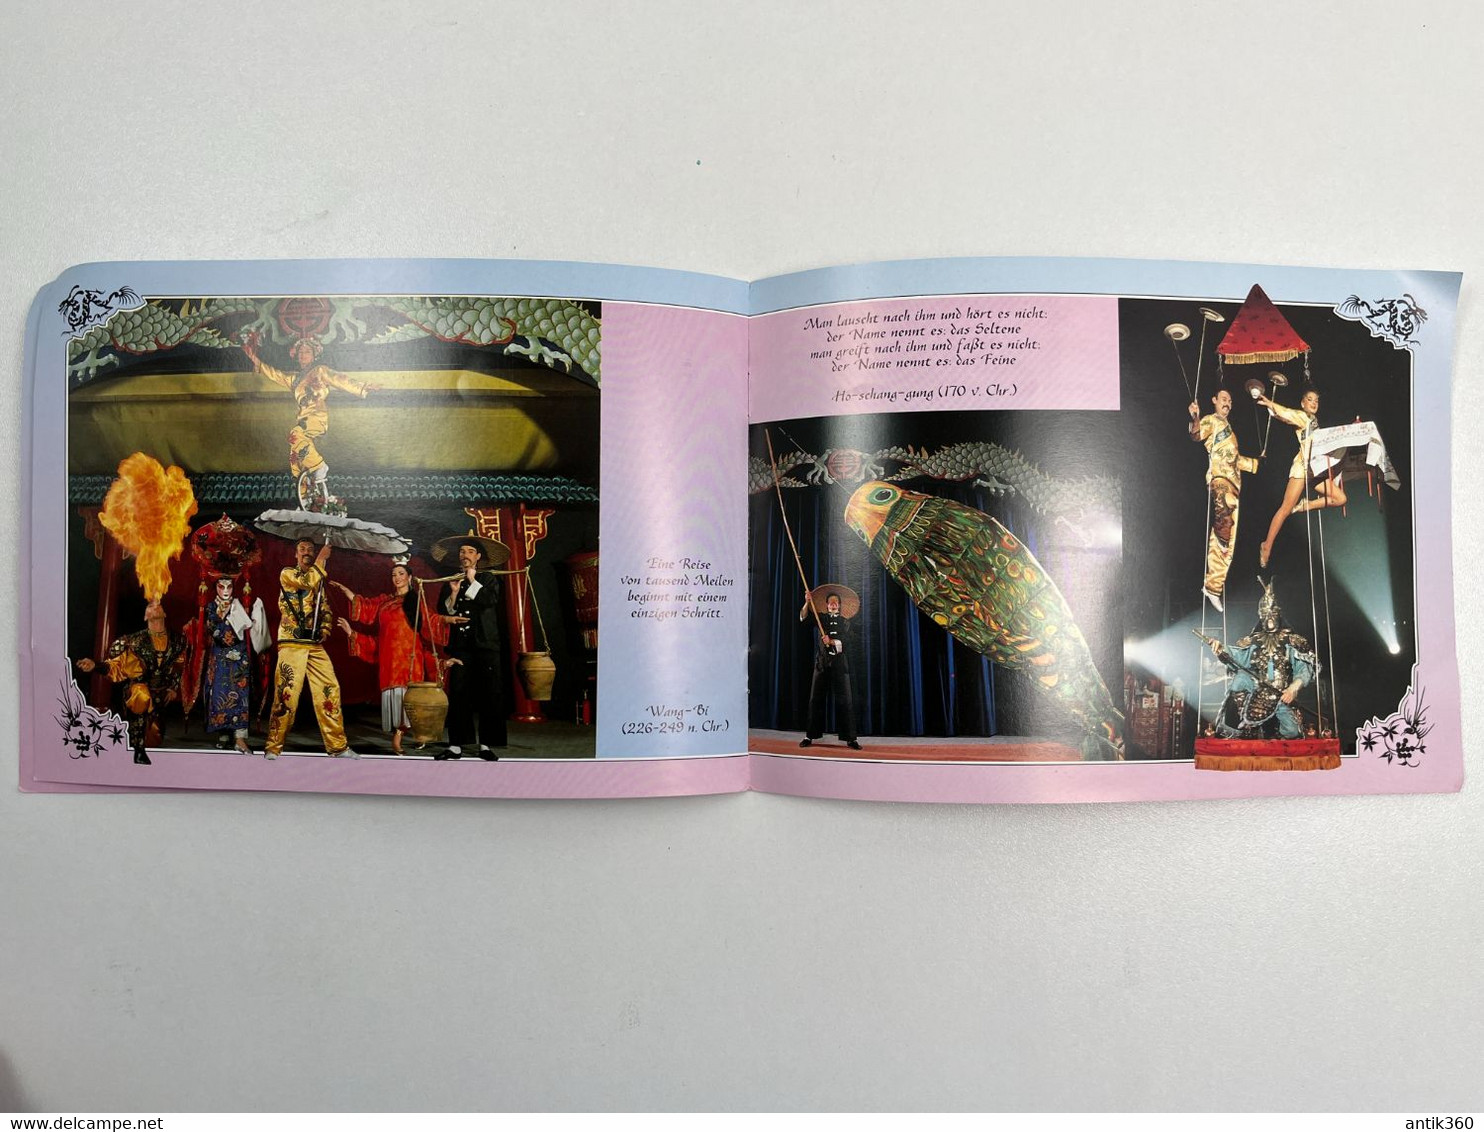 Cirque - Brochure Spectacle Acrobates Jongleurs China Show Sun Tseng Hai - Allemagne - Programs